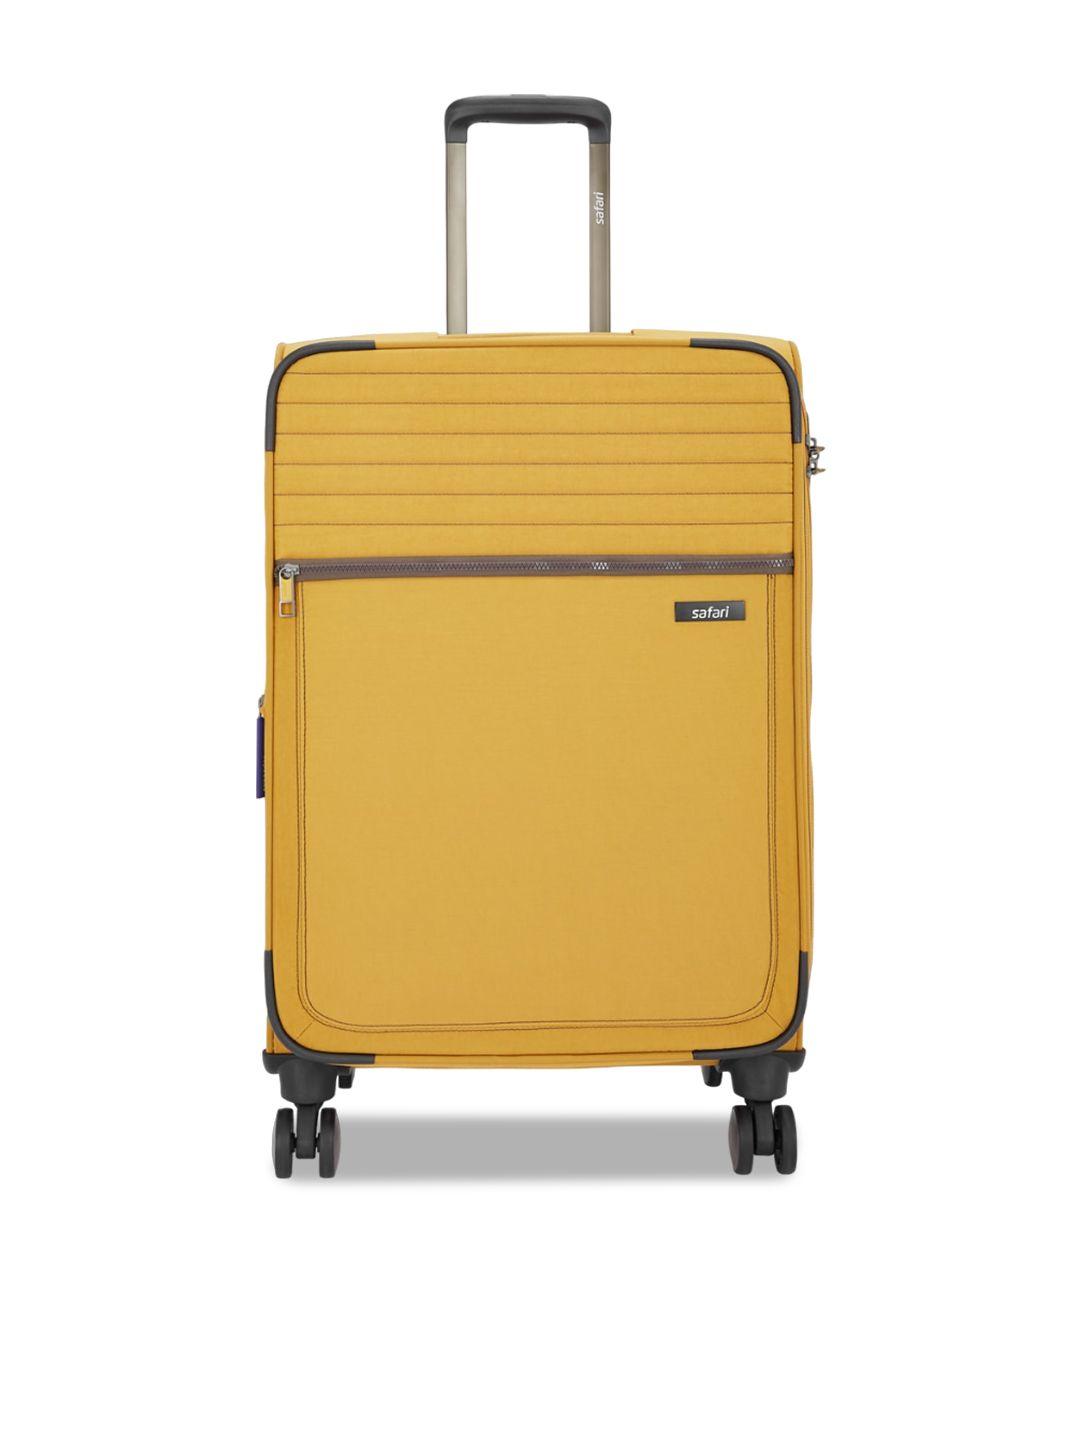 safari soft-sided large trolley suitcase